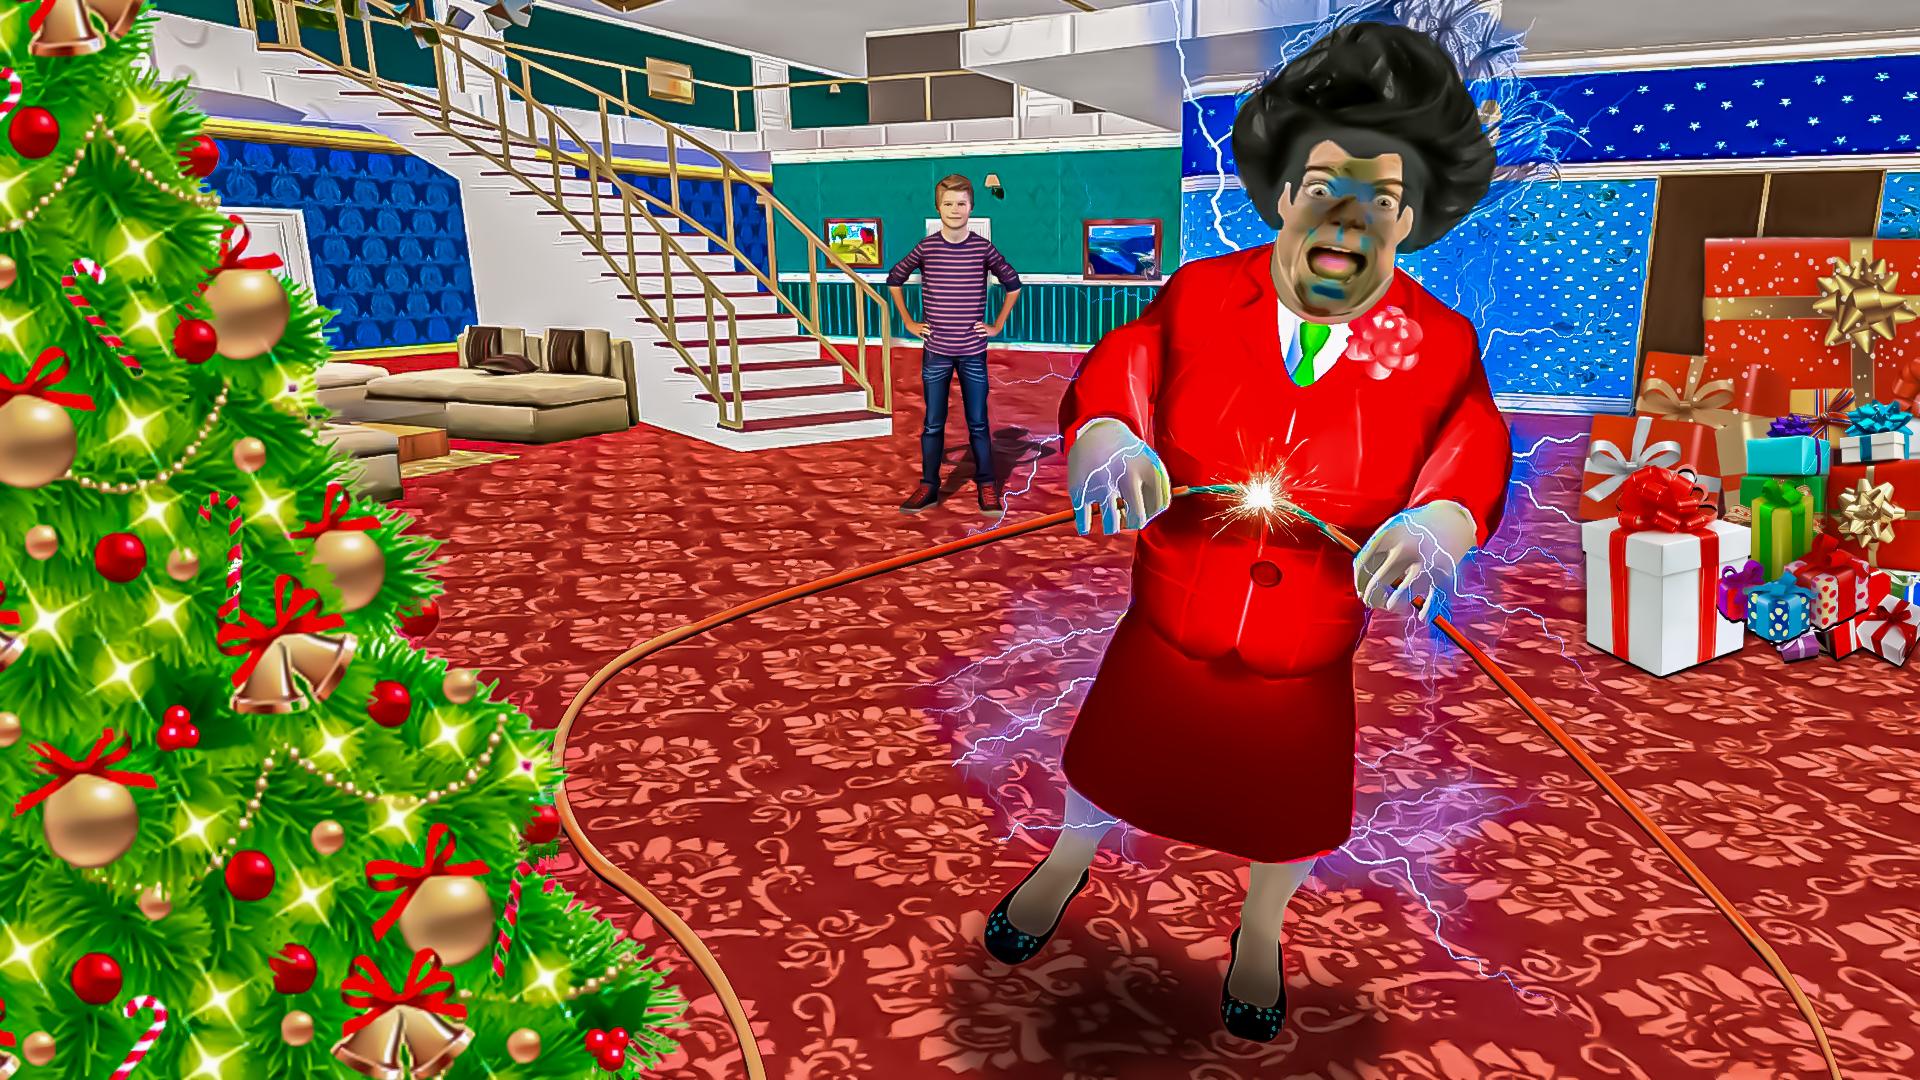 Jogo Scary Teacher Ann 3D no Jogos 360